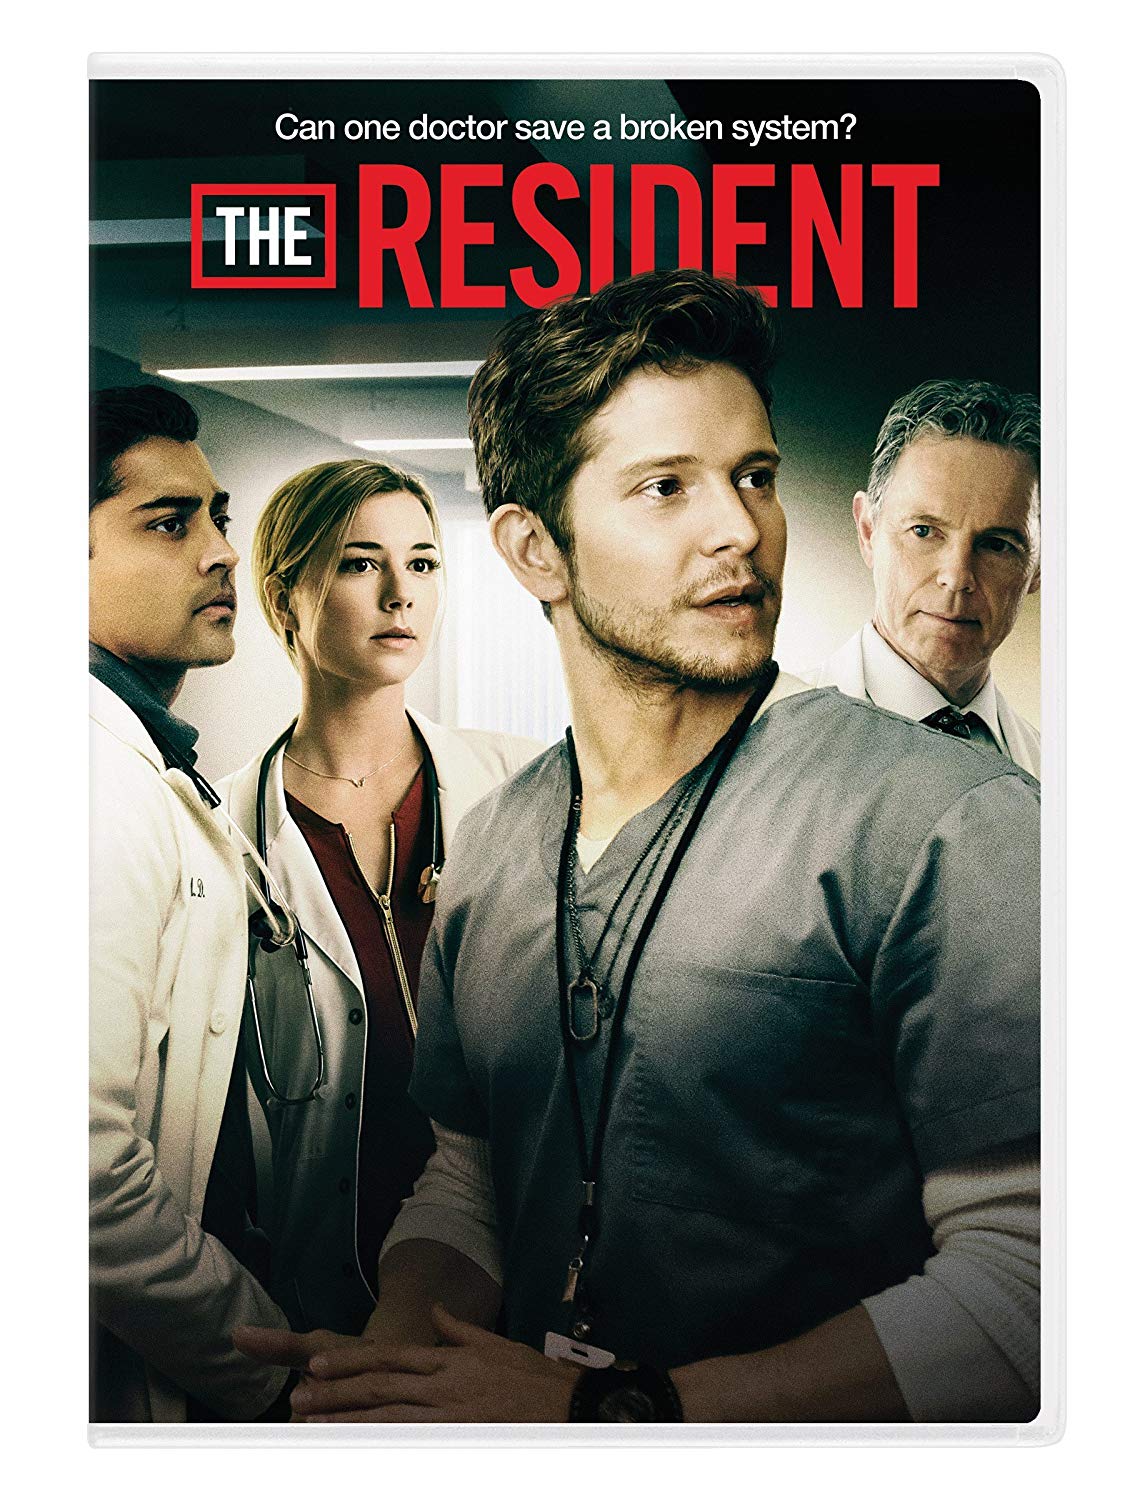 The Resident Season 1 DVD cover (20th Century Fox Home Entertainment)